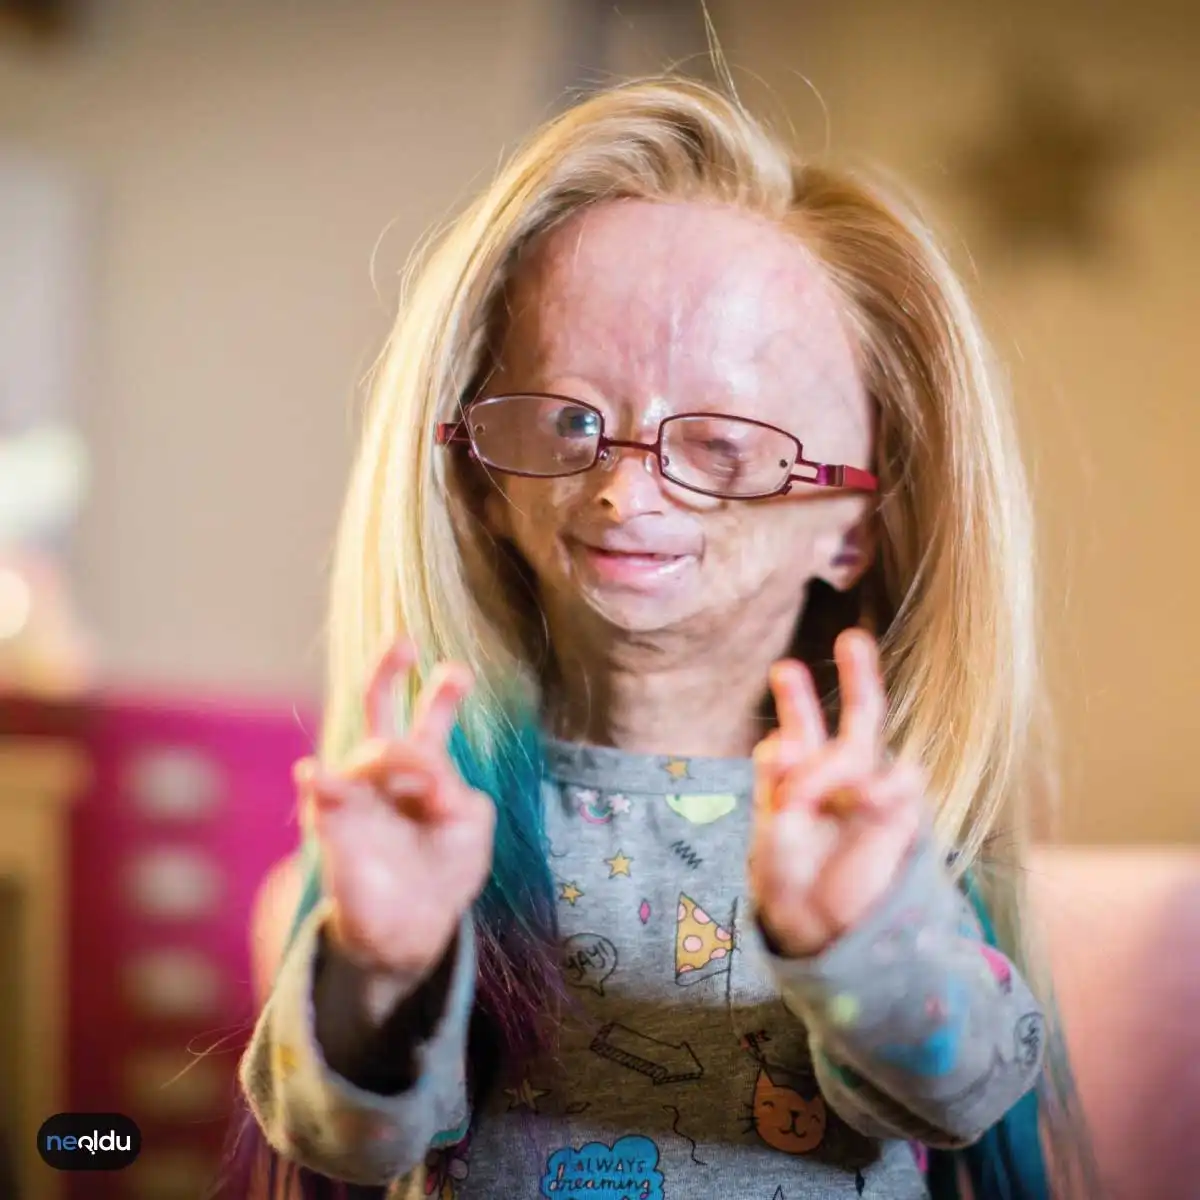 Progeria